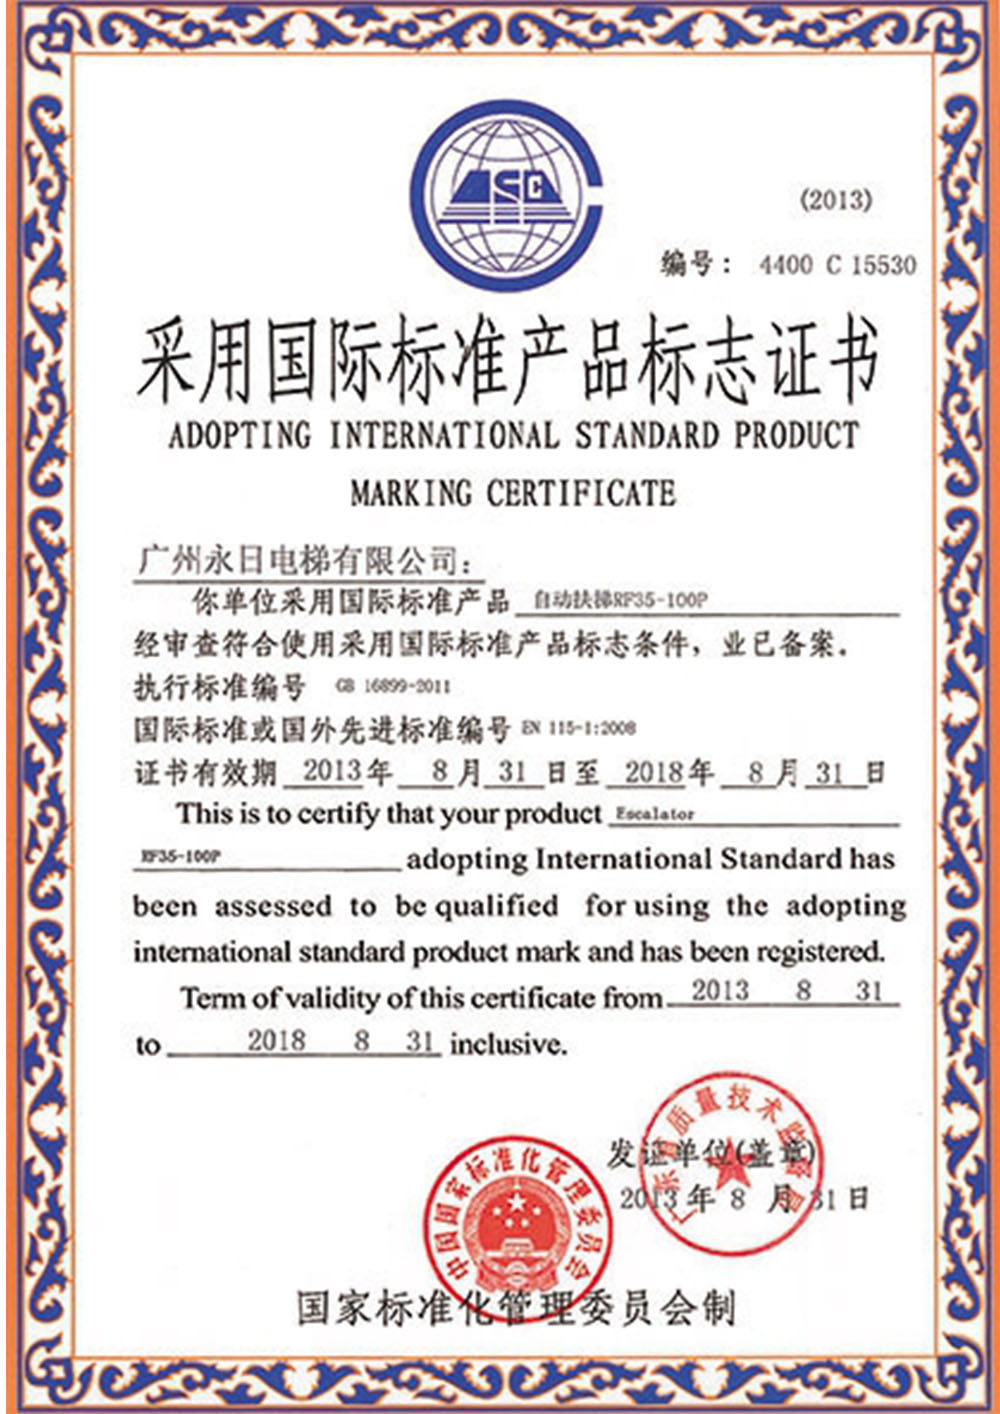 International Standard Product Mark - Escalator